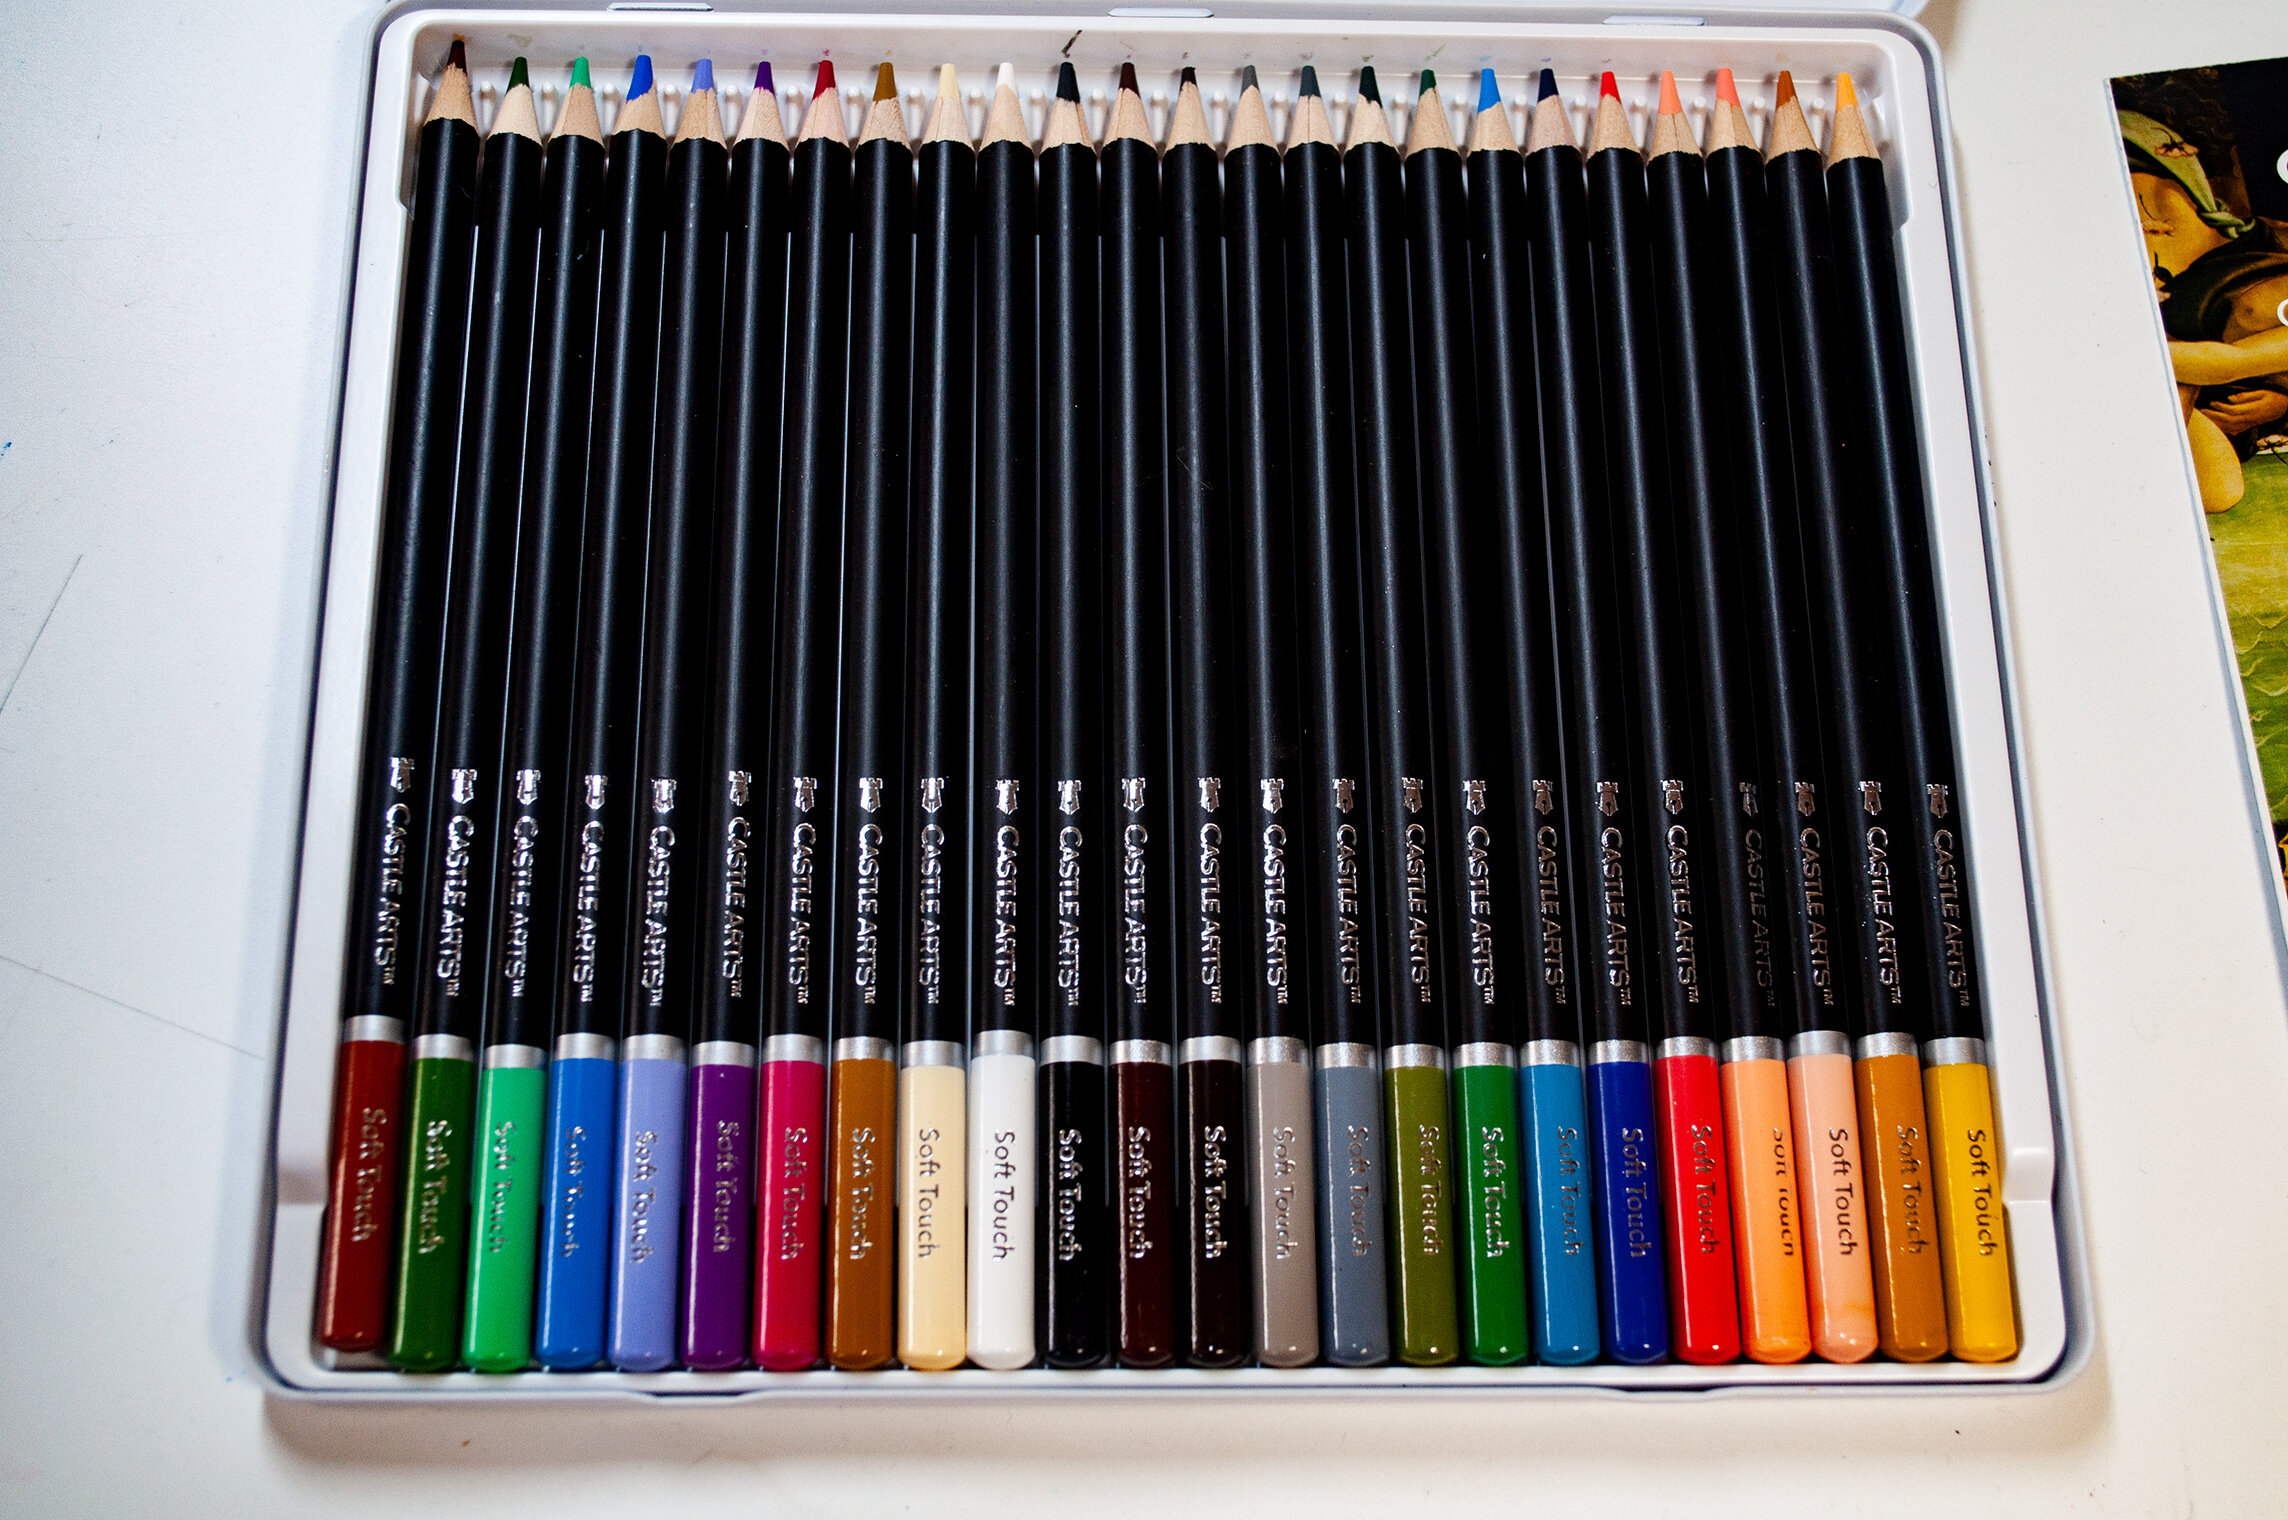 Castle Arts Pasteltint Colored Pencil Review — The Art Gear Guide